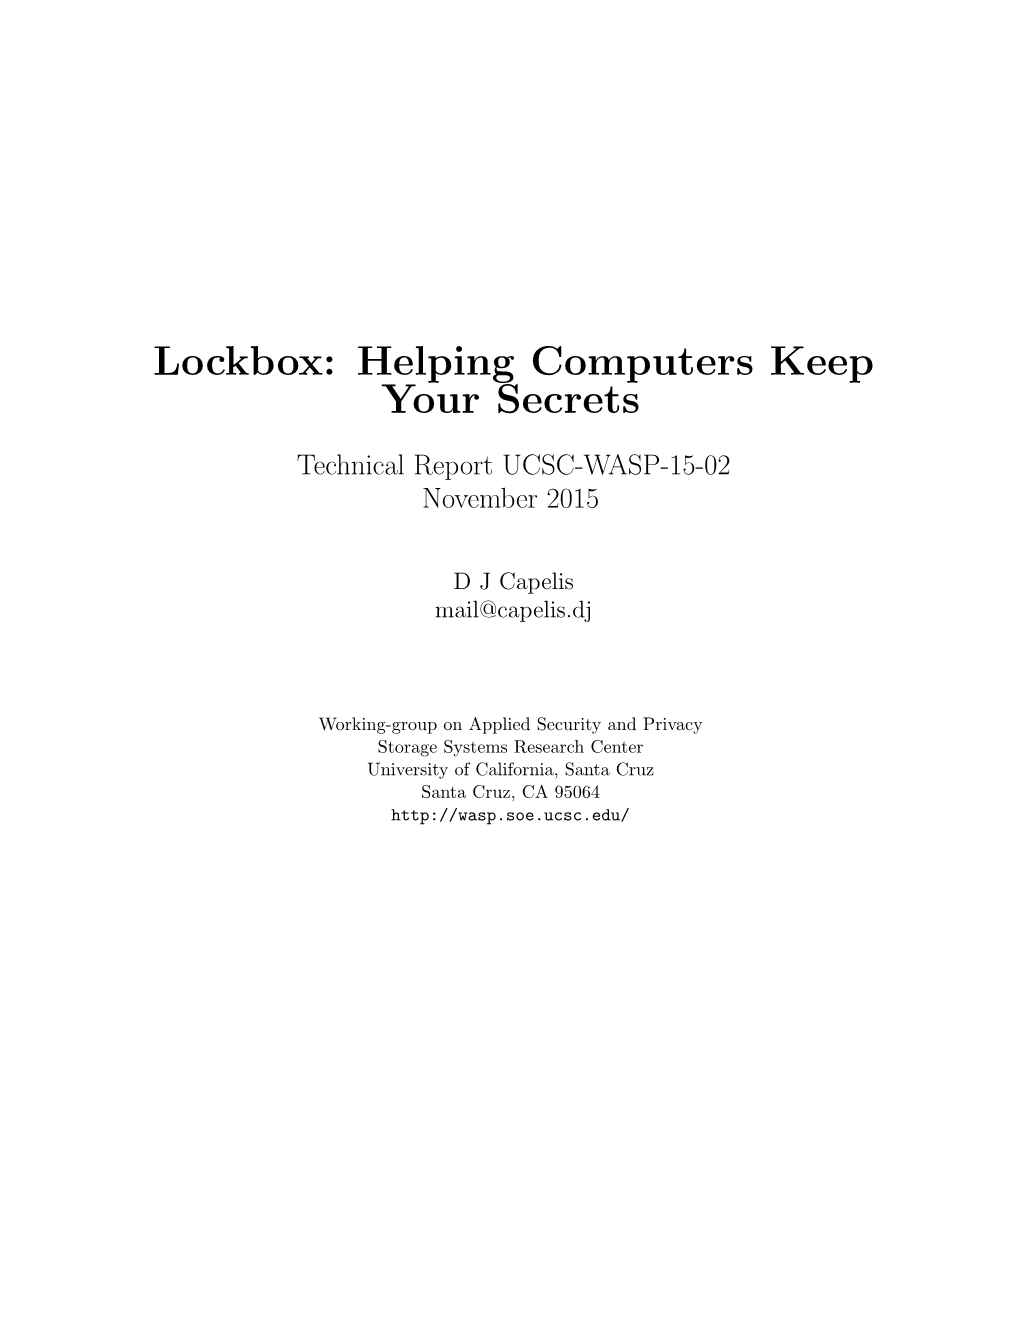 Lockbox: Helping Computers Keep Your Secrets